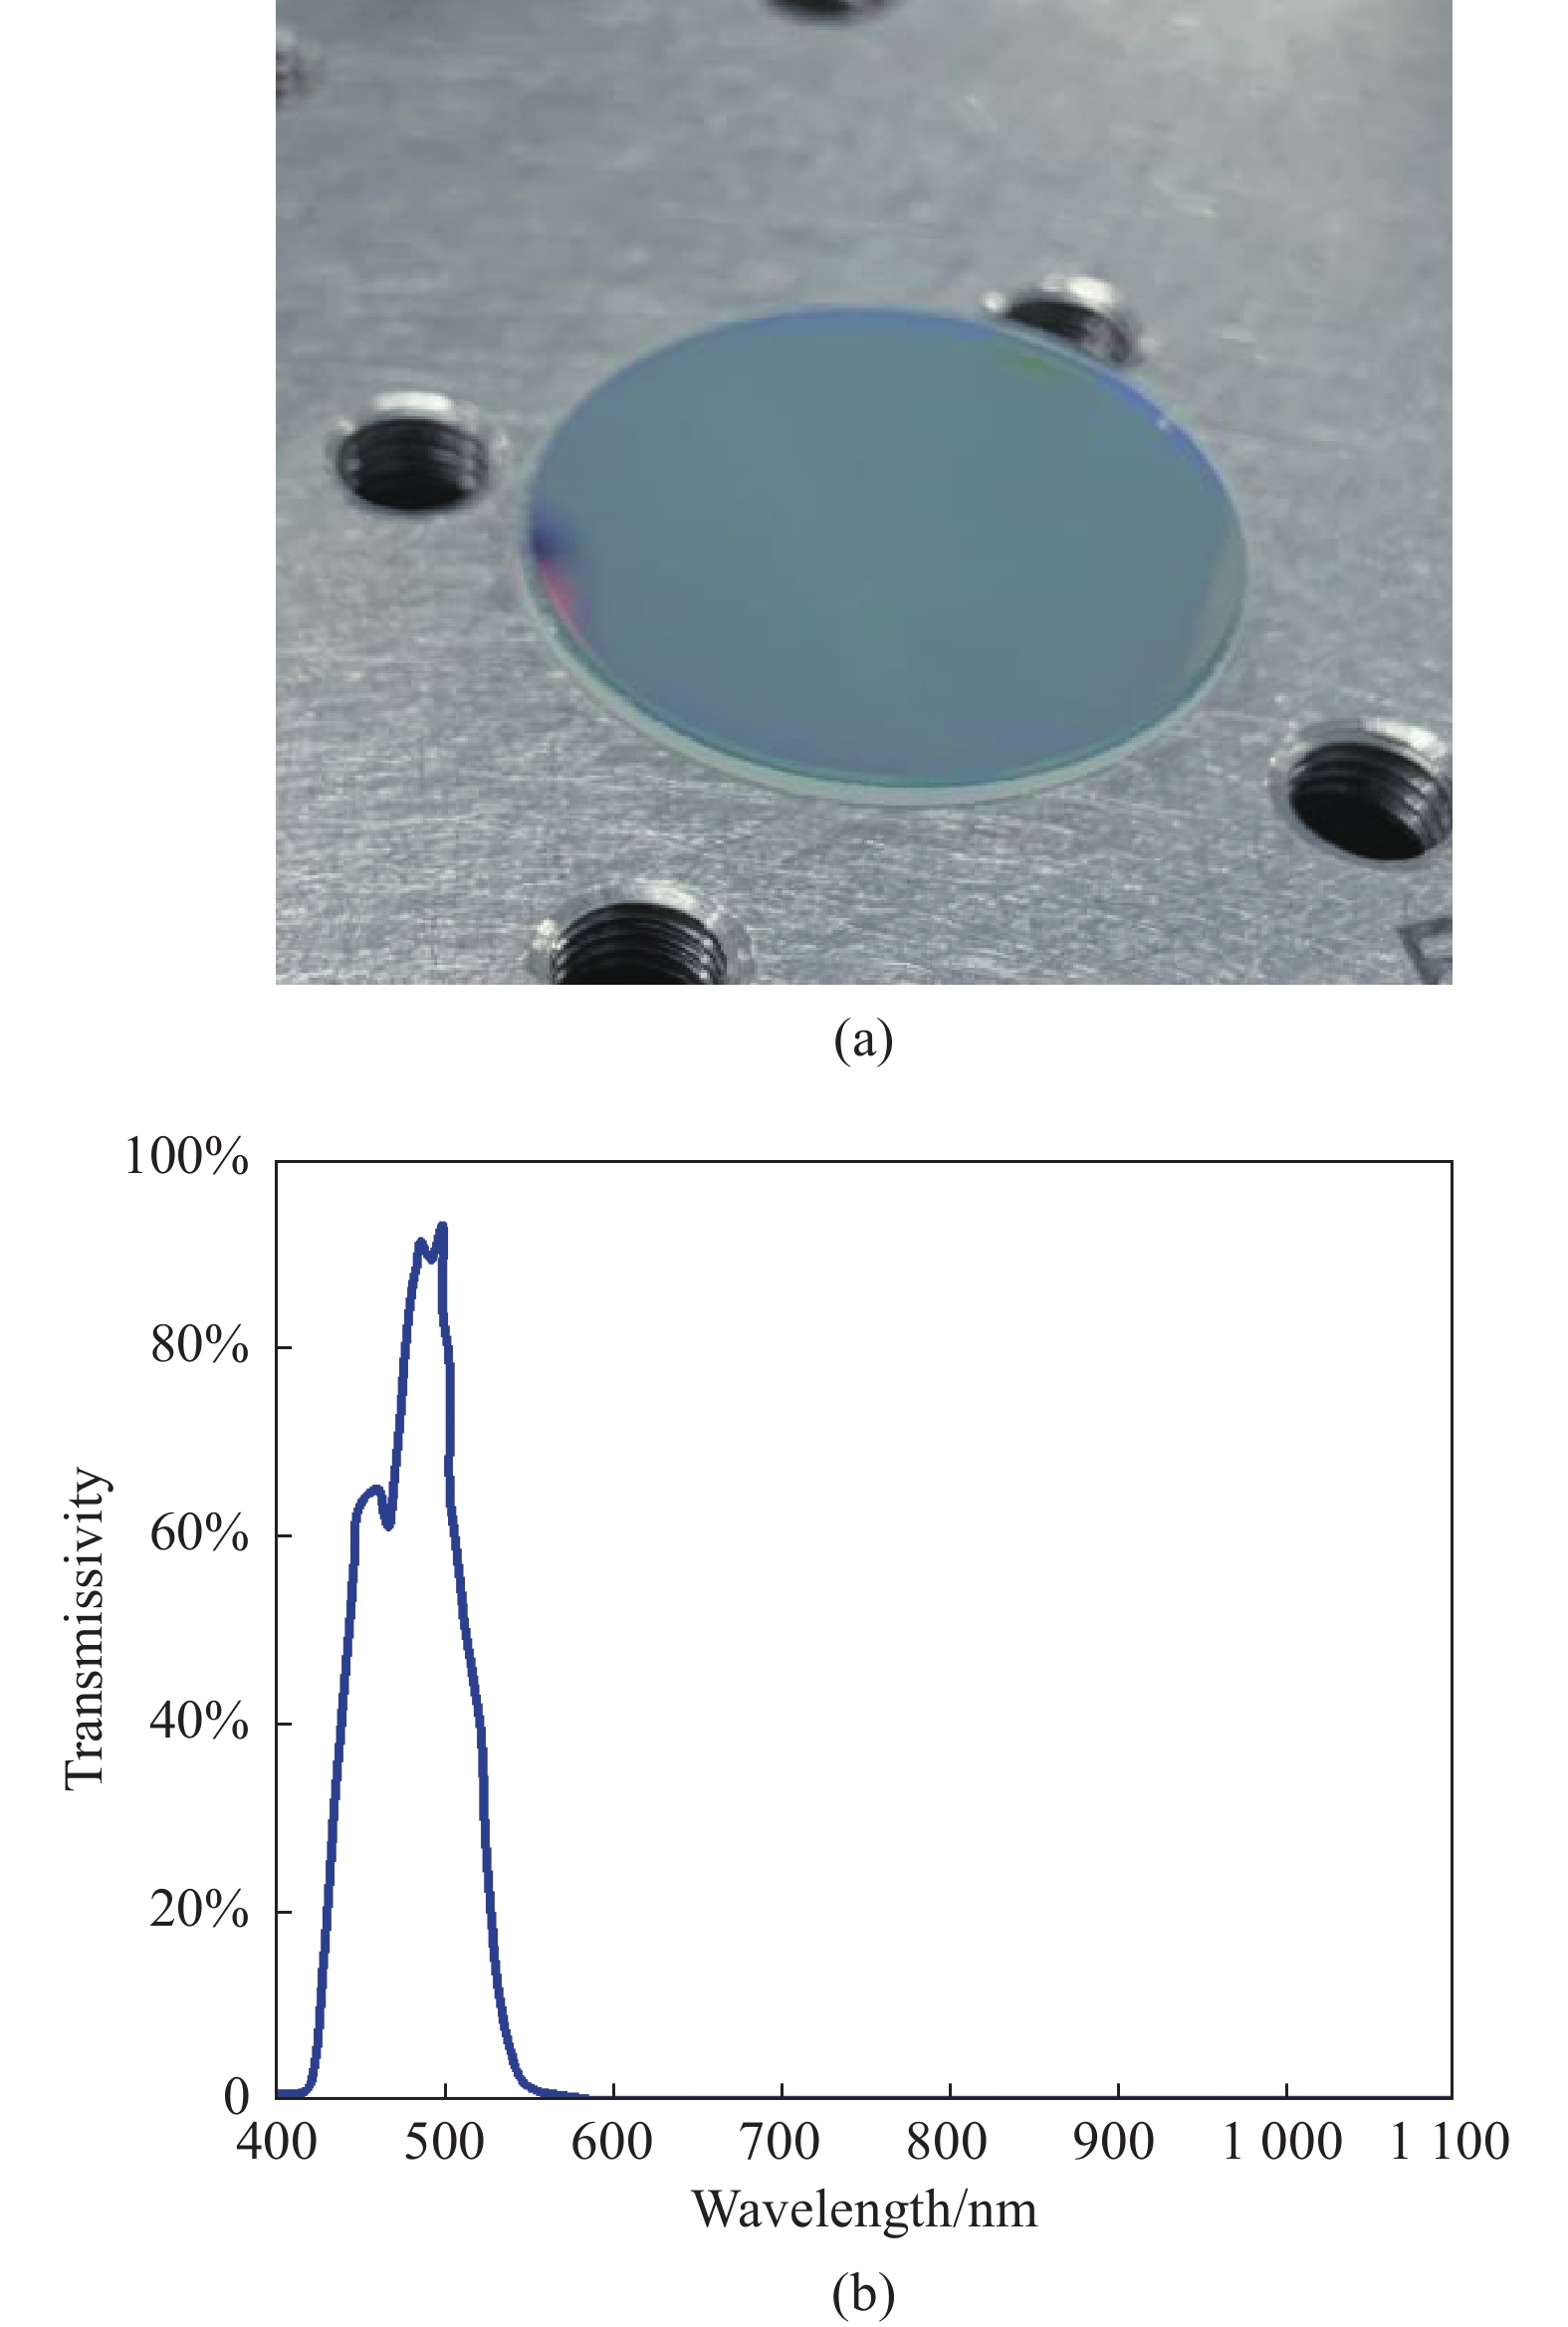 (a) Ta2O5/SiO2 multilayer film sample; (b) Spectrogram of multilayer film transmission